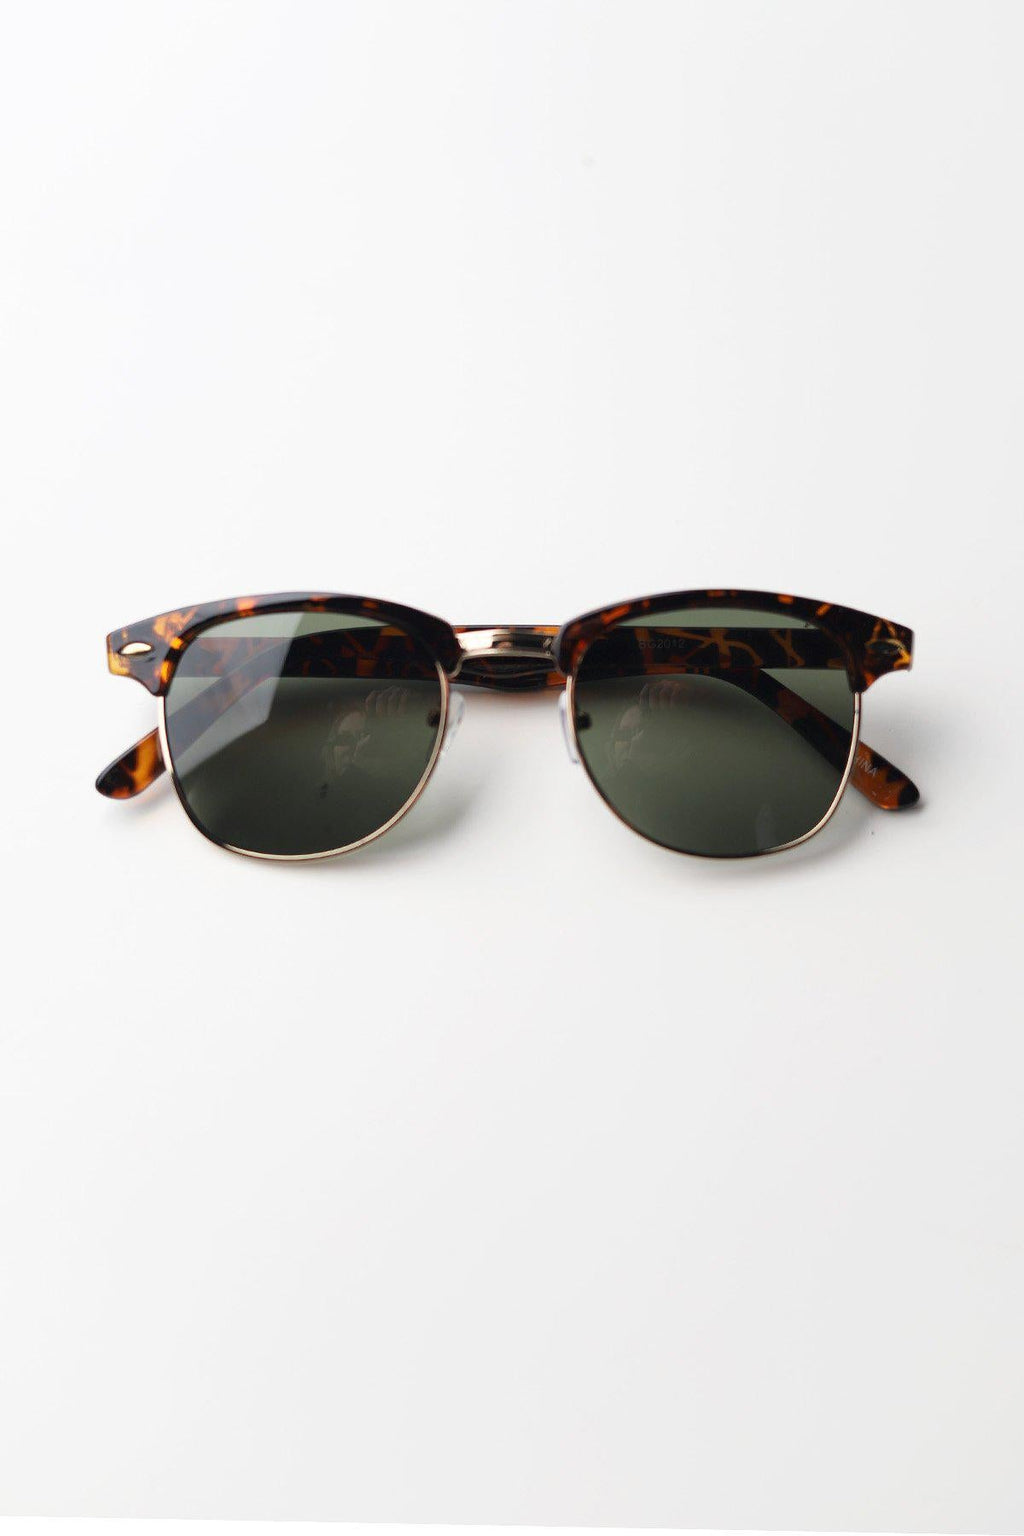 Clubmaster Tortoise Unisex Sunglasses / Grey Green Lens